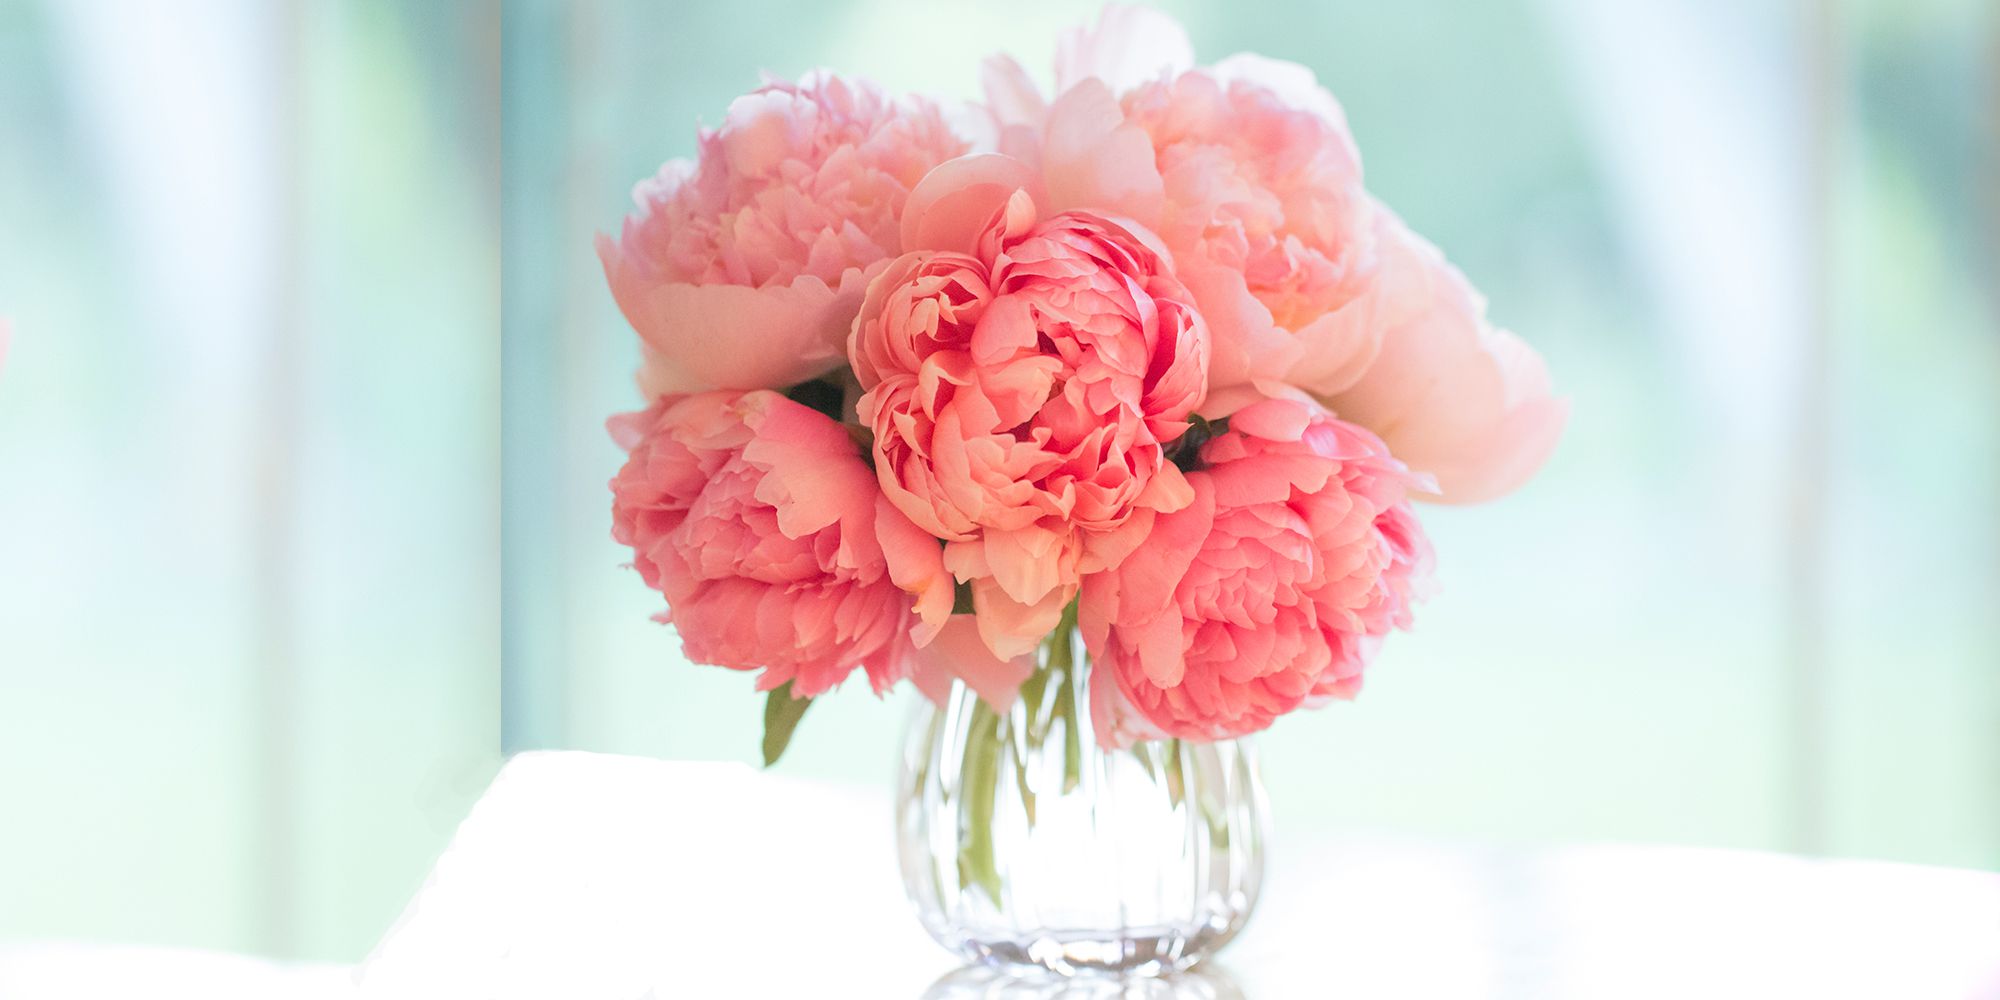 11 Best Flowers for Valentine's Day - Popular Roses & Arrangements ...